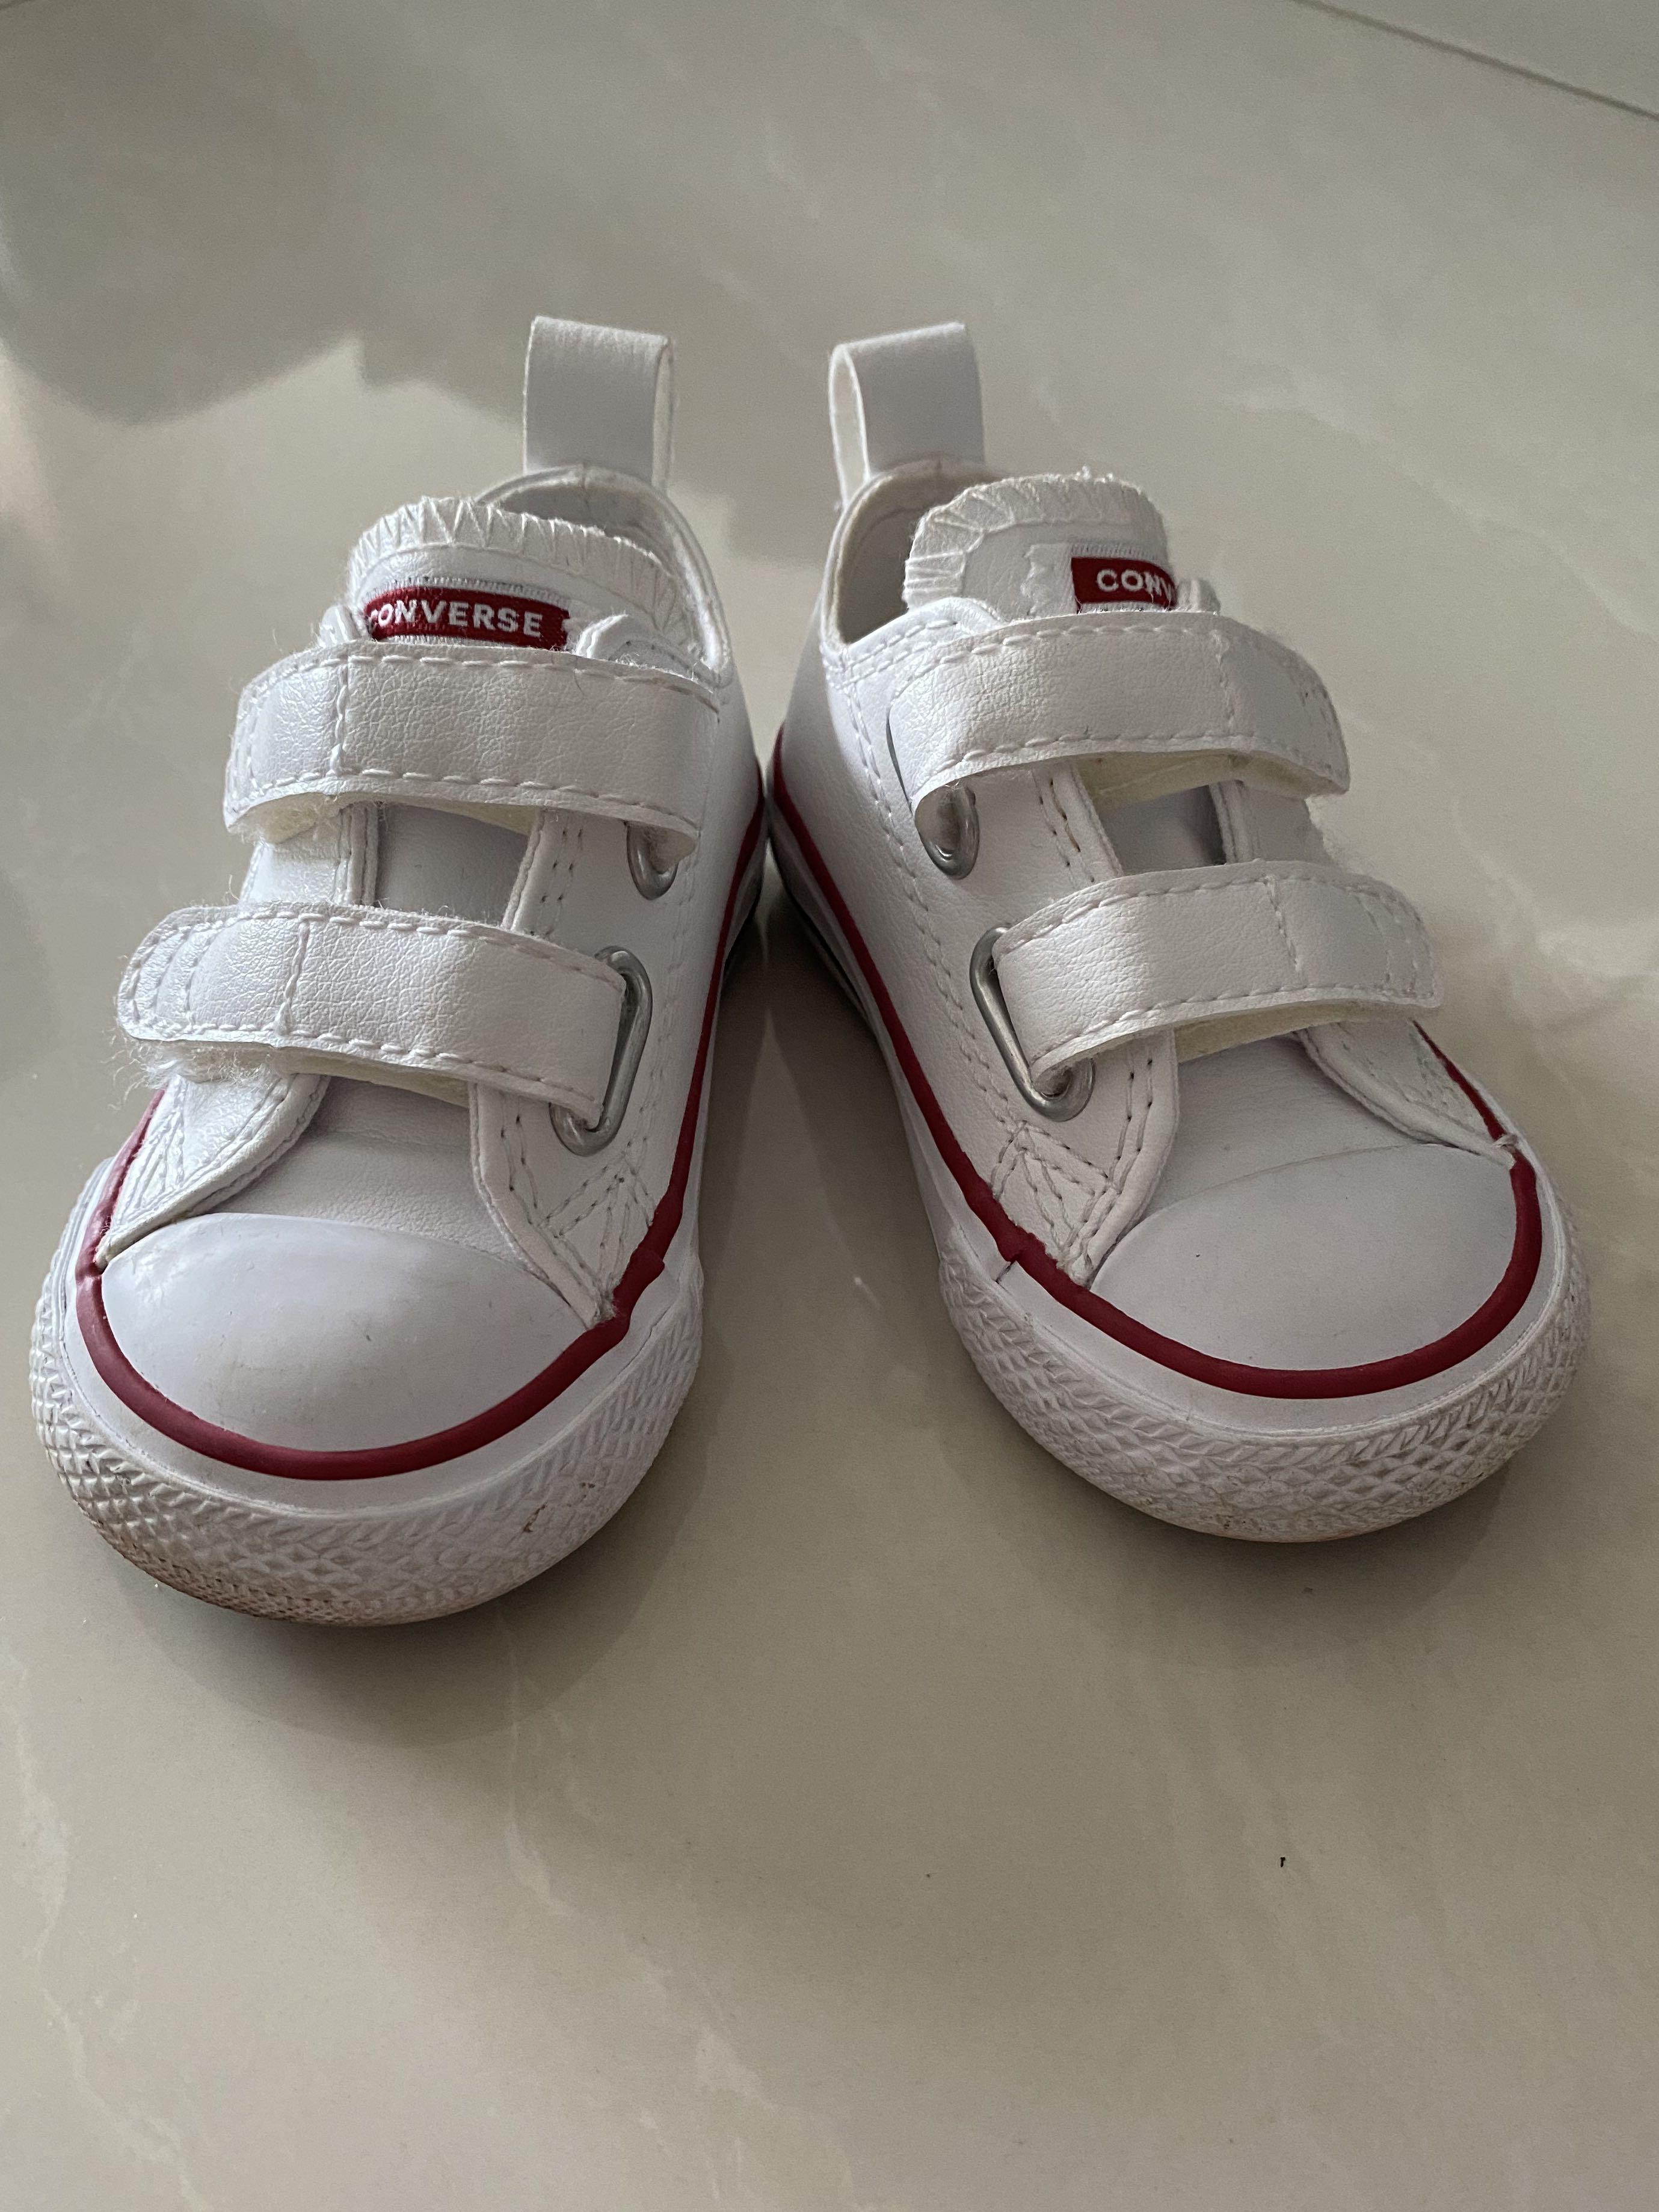 Baby converse velcro sneakers 6-12 